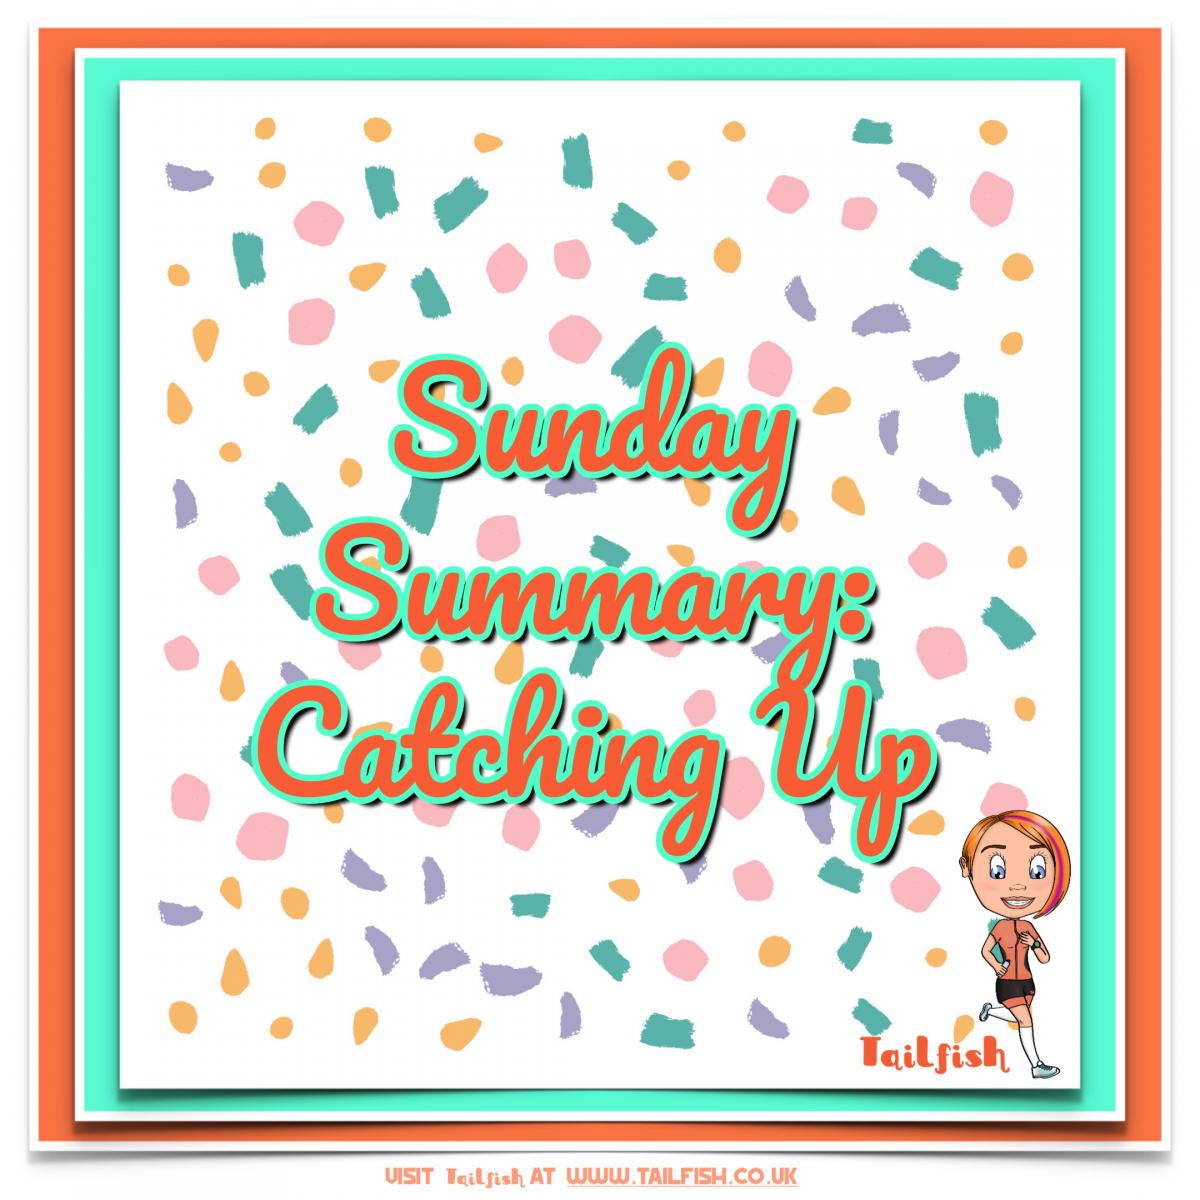 Sunday Summary: Catching Up